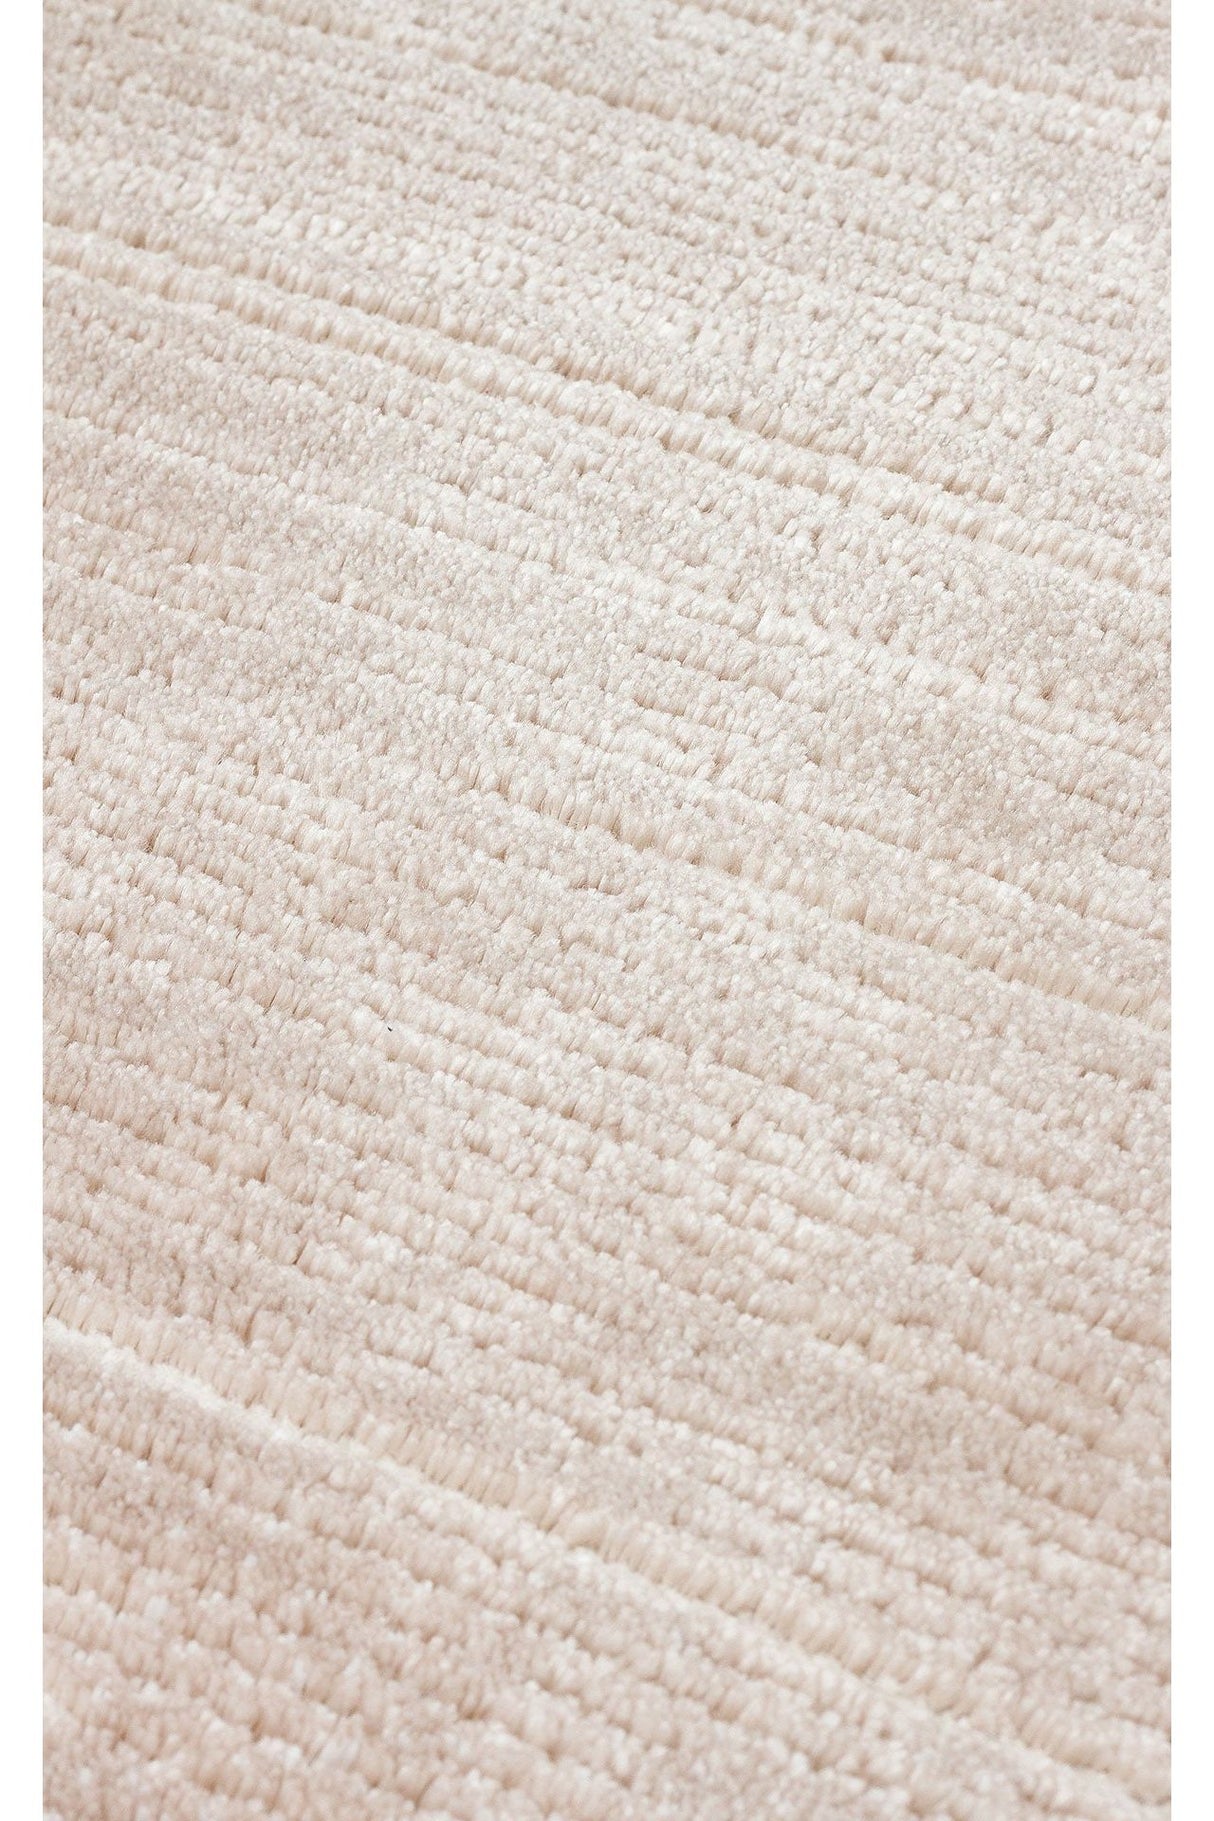 #Turkish_Carpets_Rugs# #Modern_Carpets# #Abrash_Carpets#Lgs 16 Cream Vizon Xw